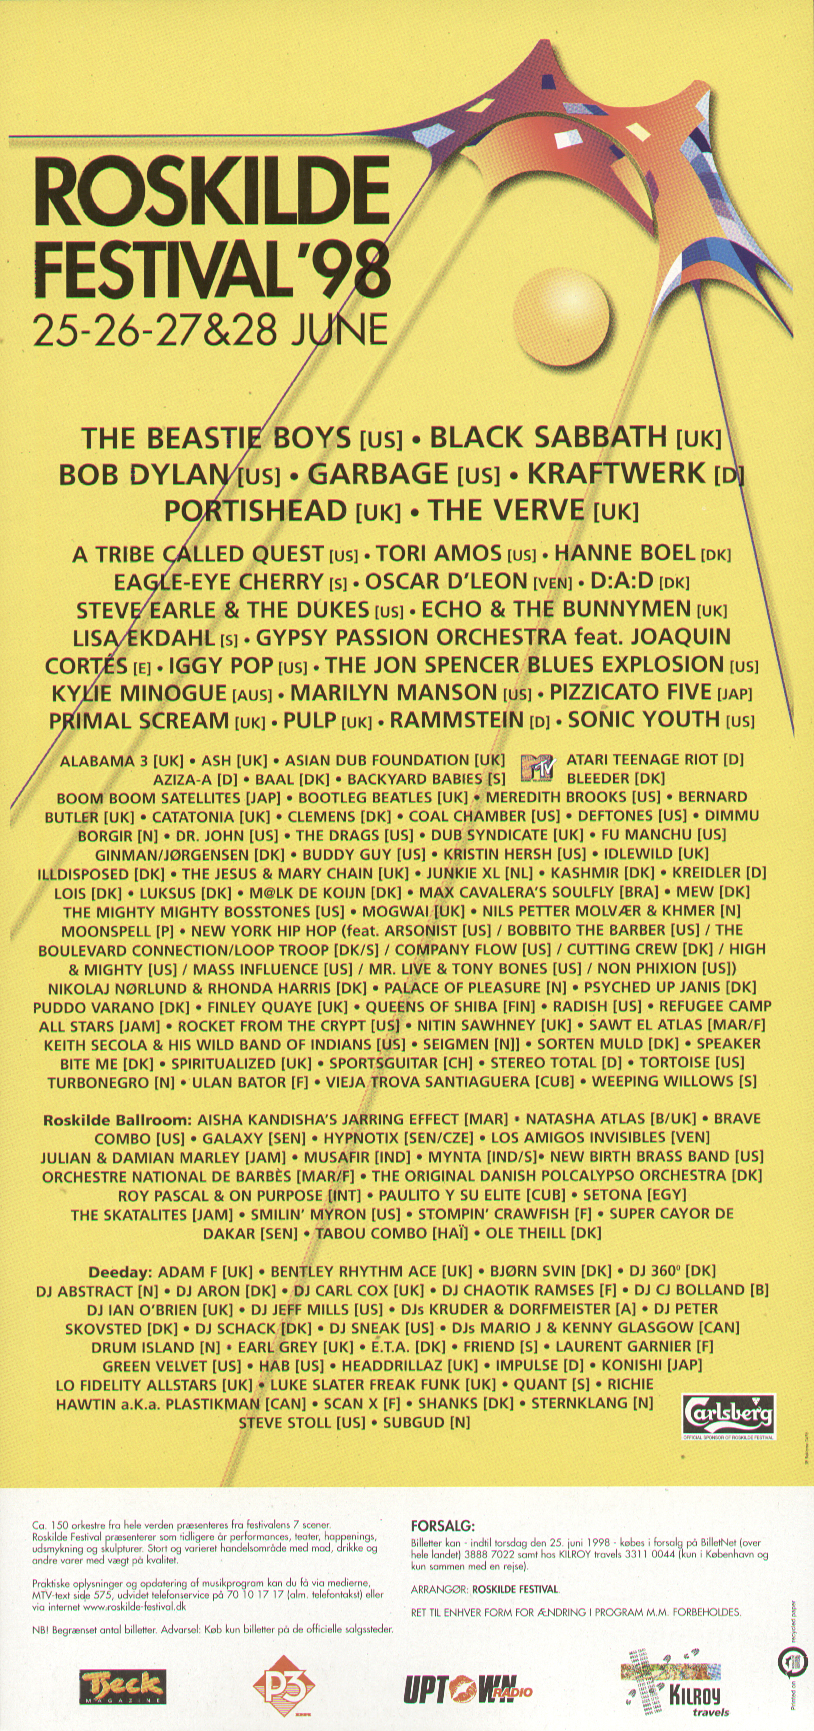 mistænksom Tung lastbil Layouten Roskilde Festival - Roskilde Festival '98 Large poster:  http://farm6.static.flickr.com/5108/5576232527_38c02c0cef_o.jpg | Facebook